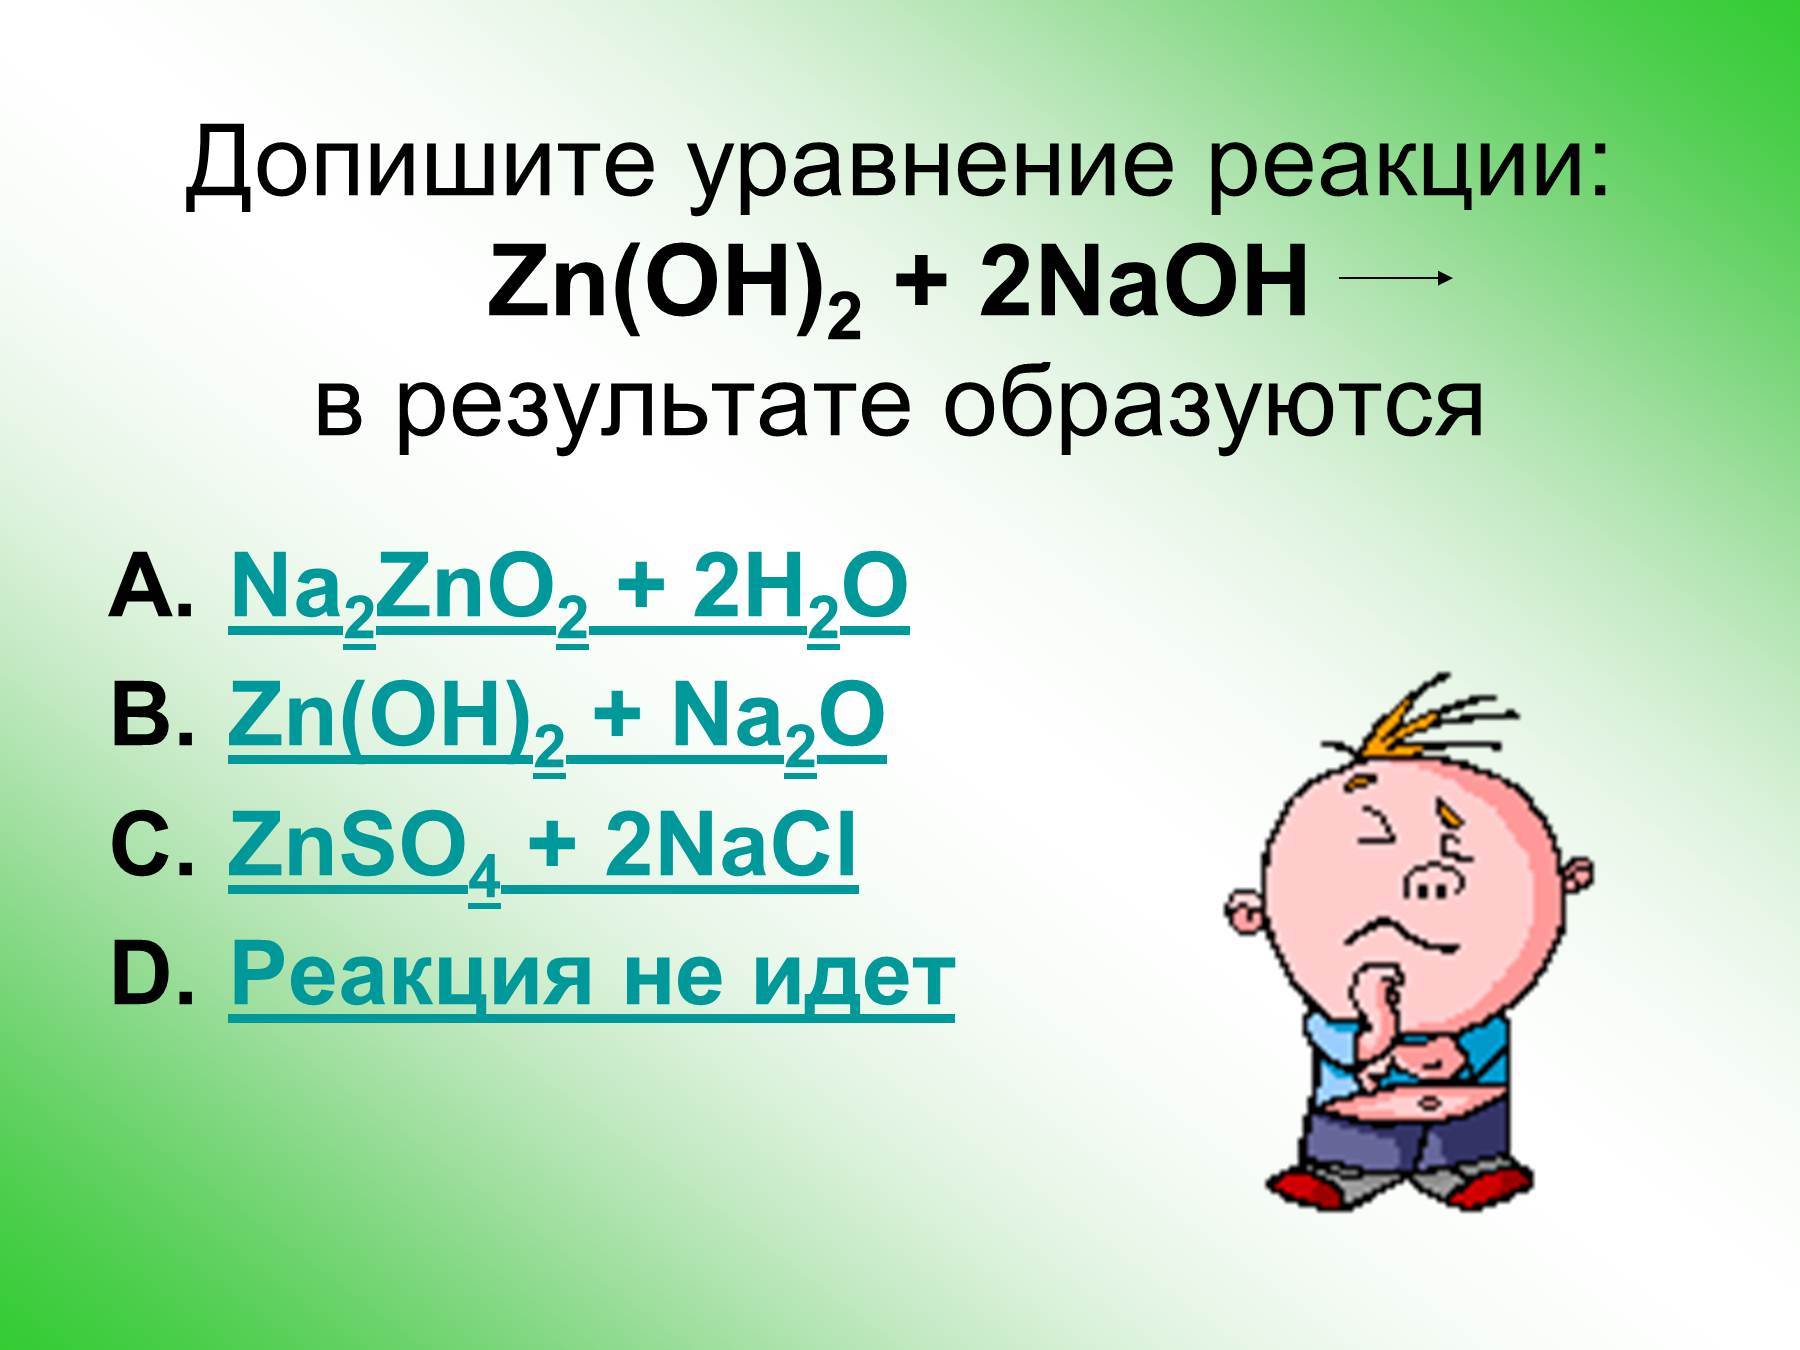 2h2o zn oh 2. ZN Oh 2 уравнение реакции. ZN Oh 2 реакции. ZN(Oh)2. ZNO уравнение реакции.